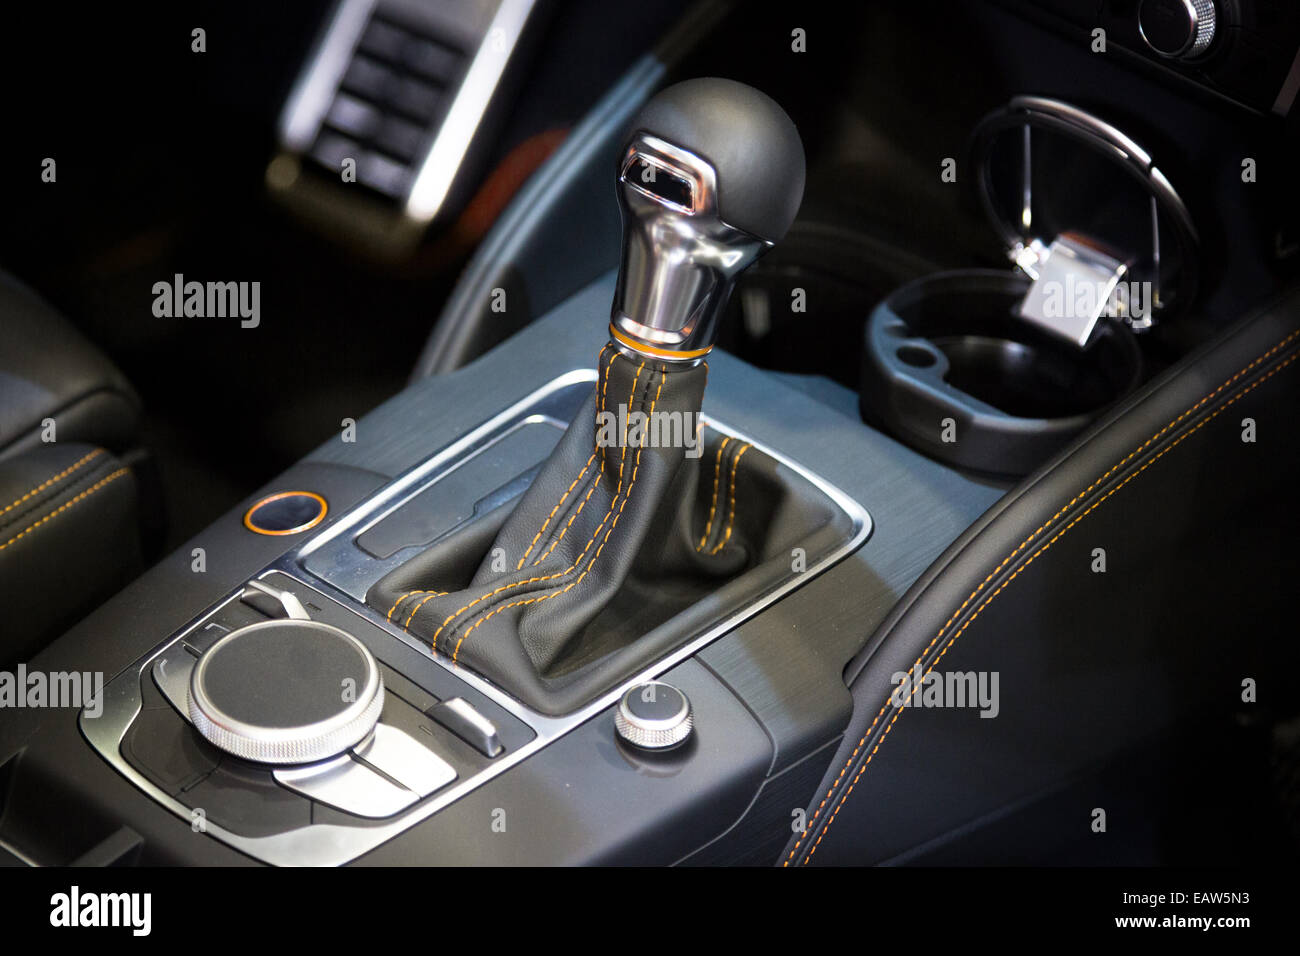 Closeup photo of car gearbox Stock Photo